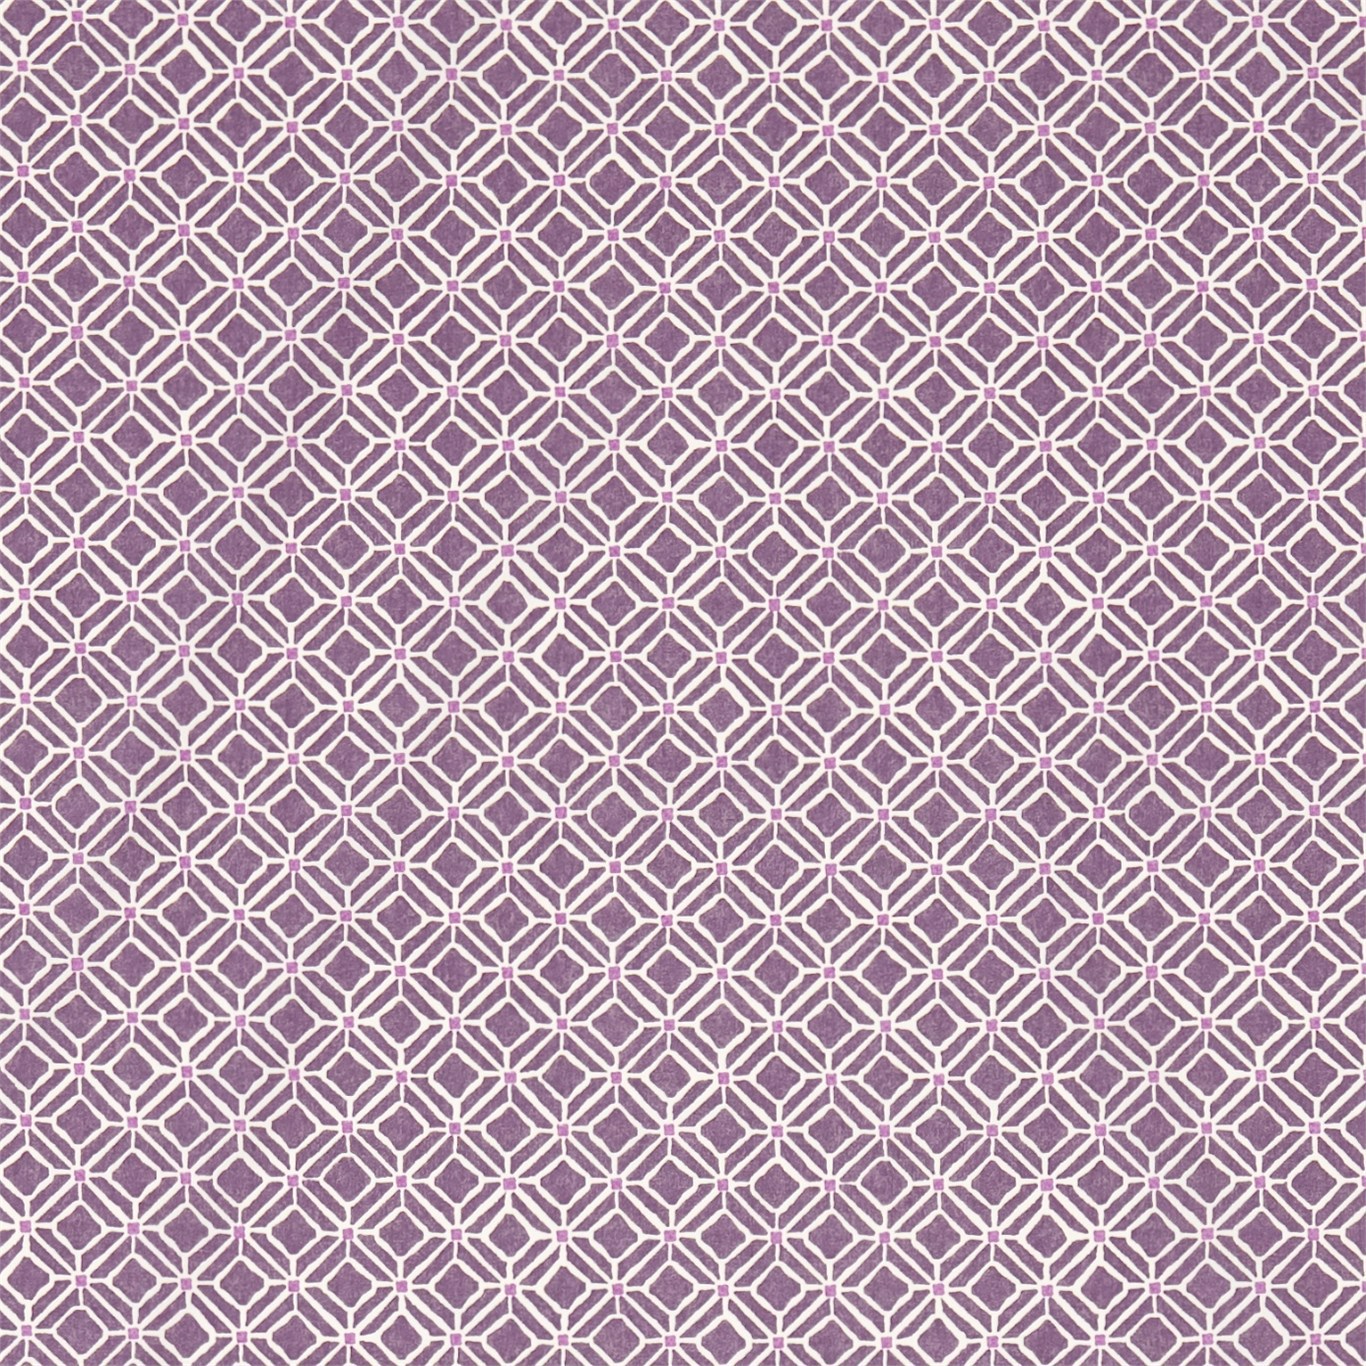 Fretwork Berry Plum Fabric by SAN